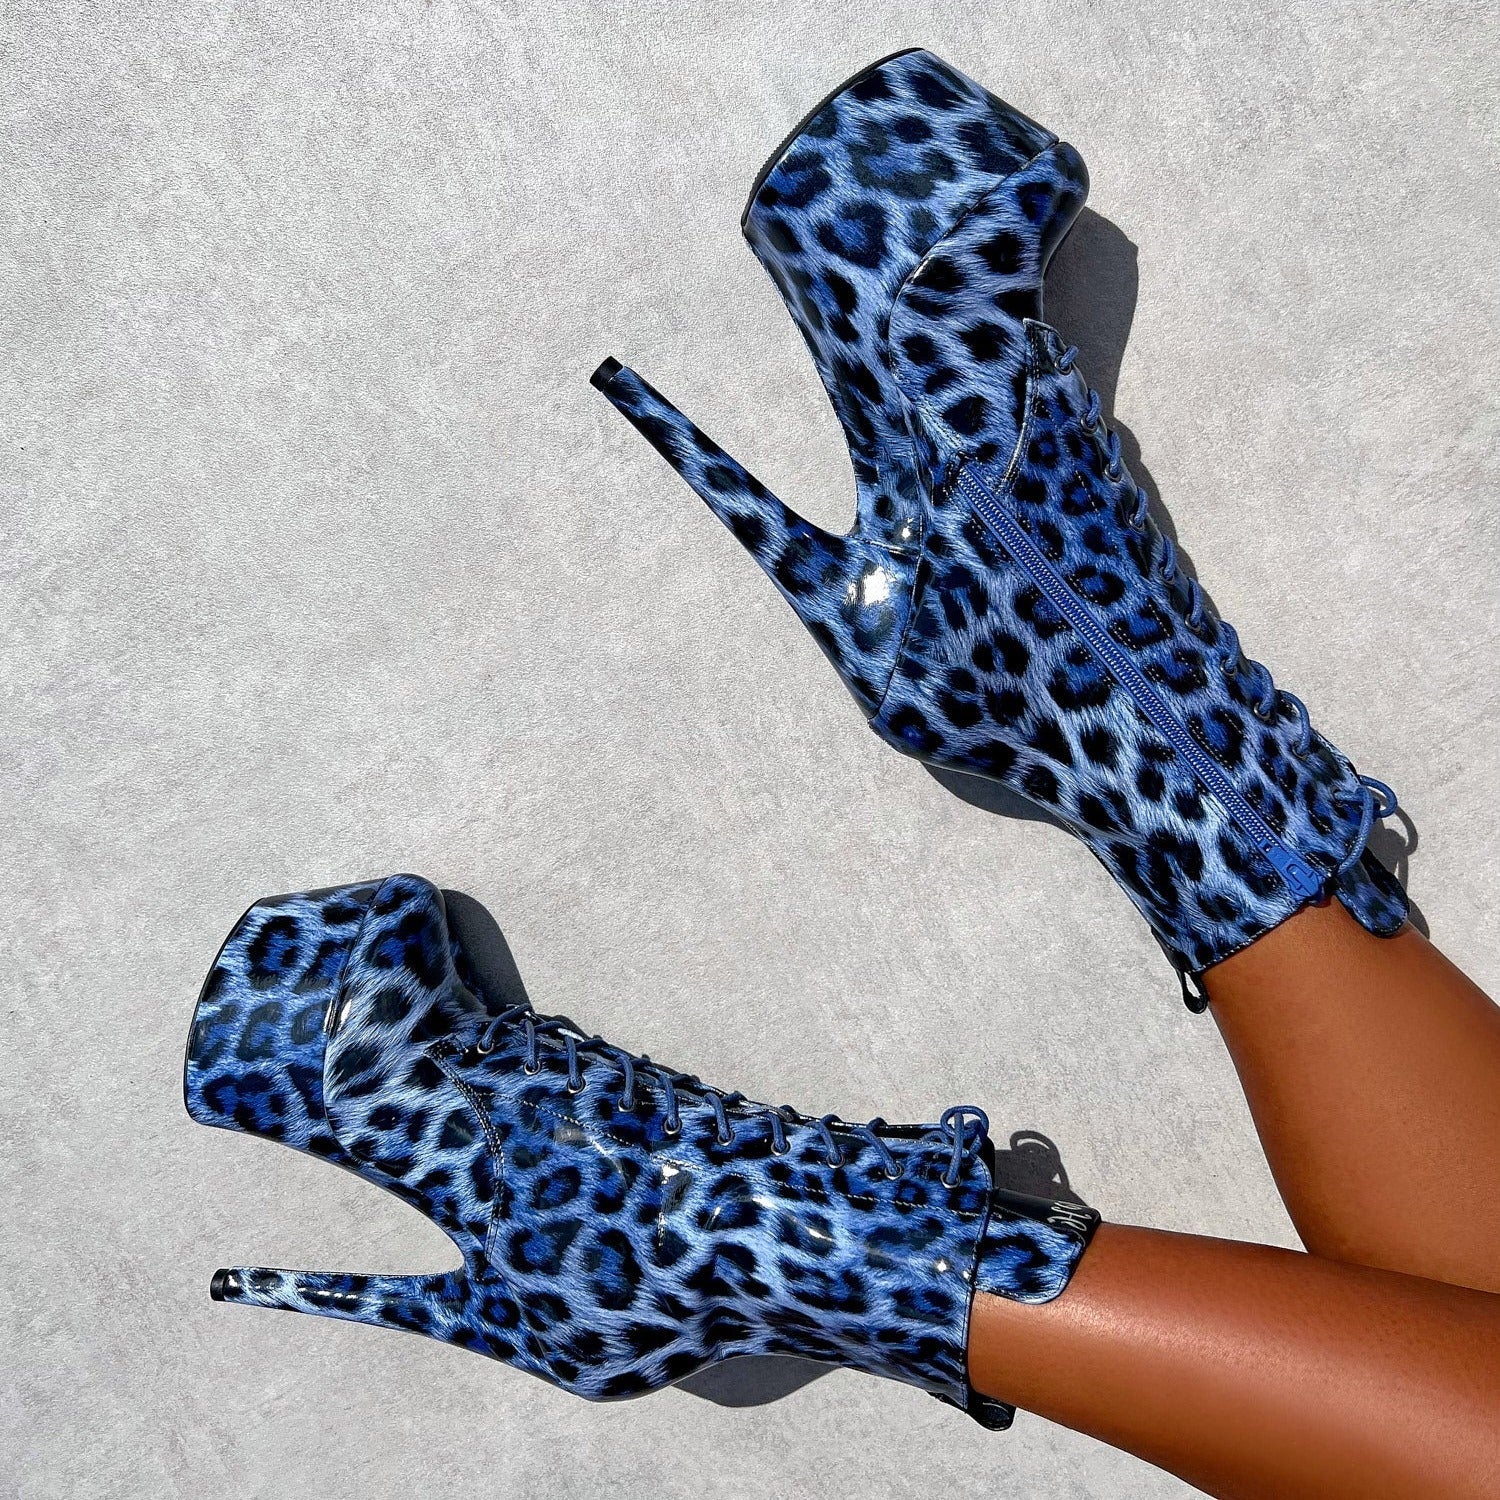 Blue Leopard Boot - 7 INCH, stripper shoe, stripper heel, pole heel, not a pleaser, platform, dancer, pole dance, floor work